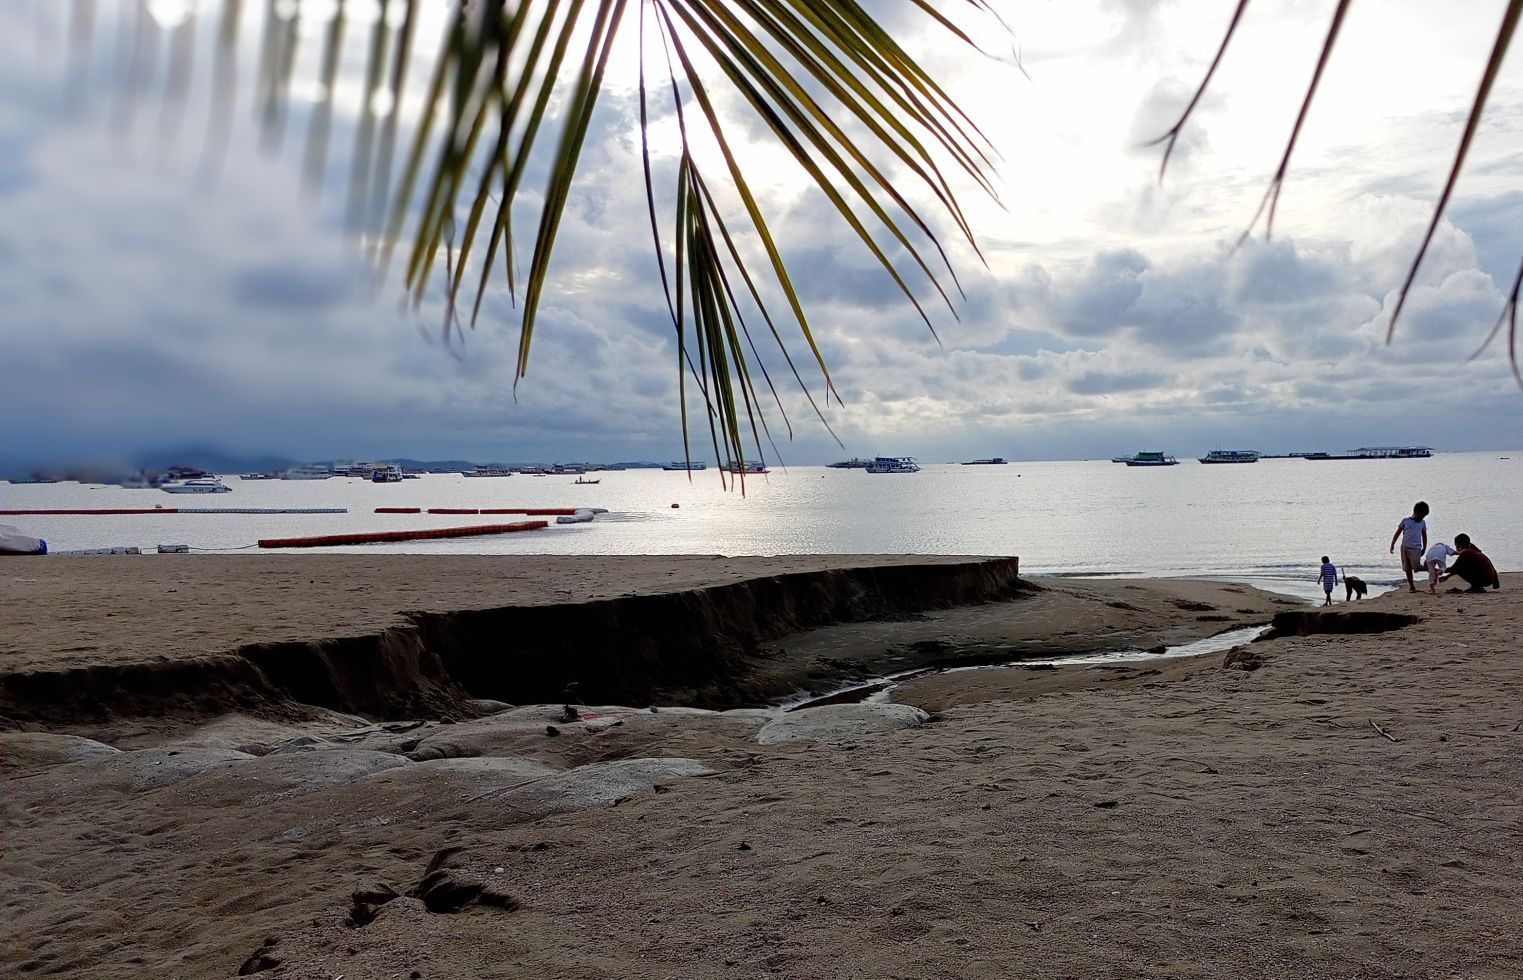 Pattaya Beach: After some heavy rain